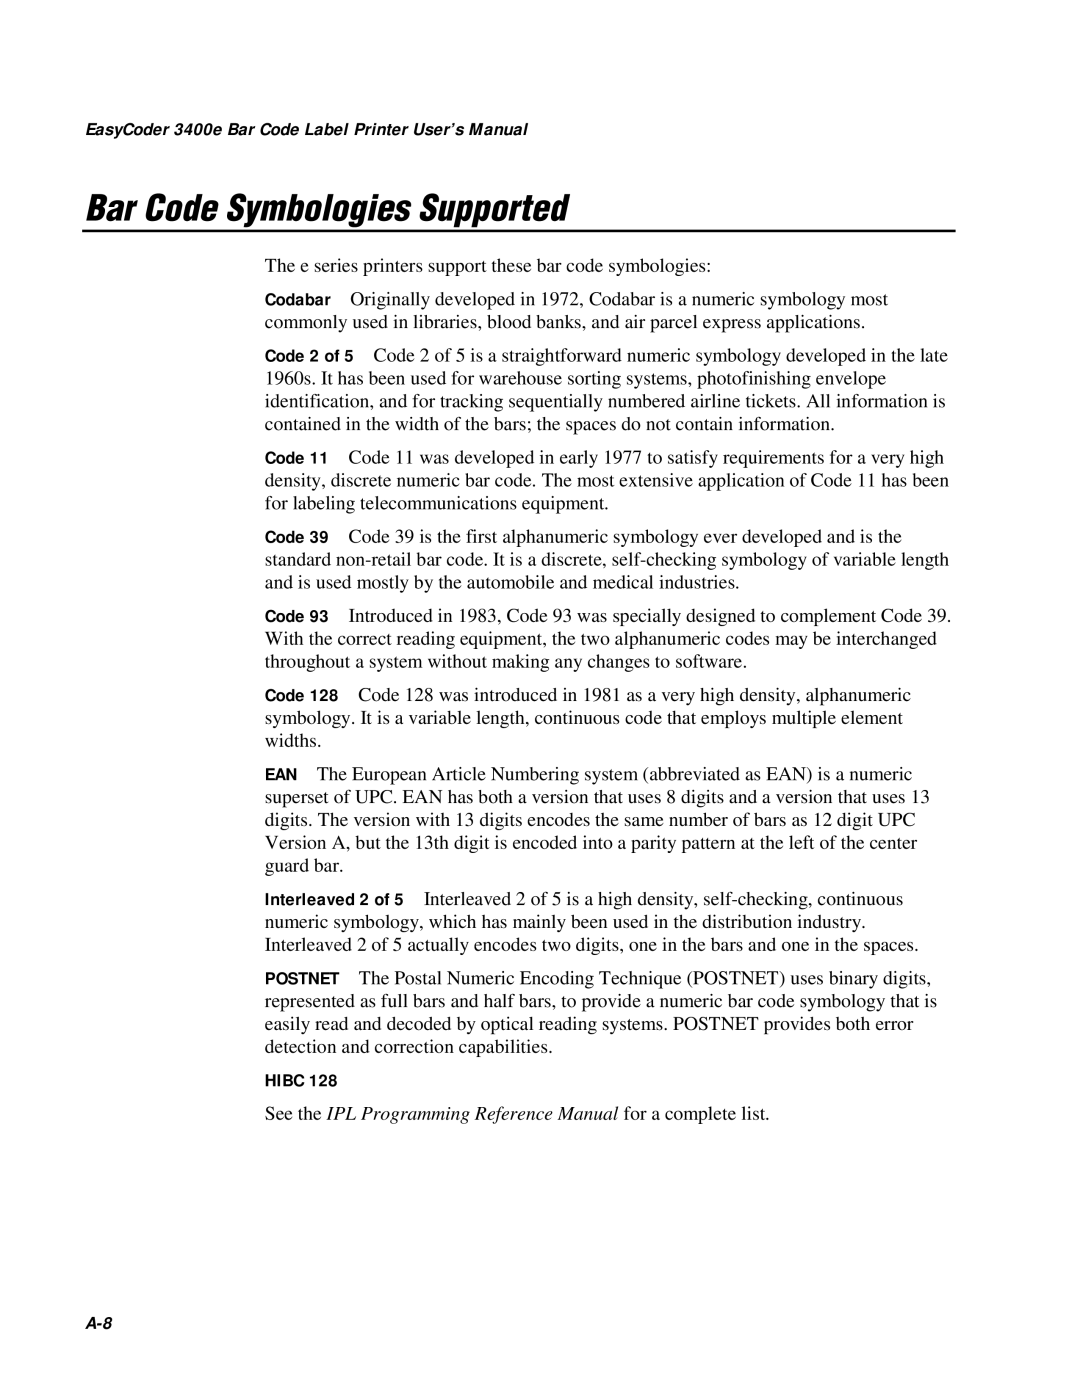 IBM user manual Bar Code Symbologies Supported, EasyCoder 3400e Bar Code Label Printer User’s Manual, Hibc 